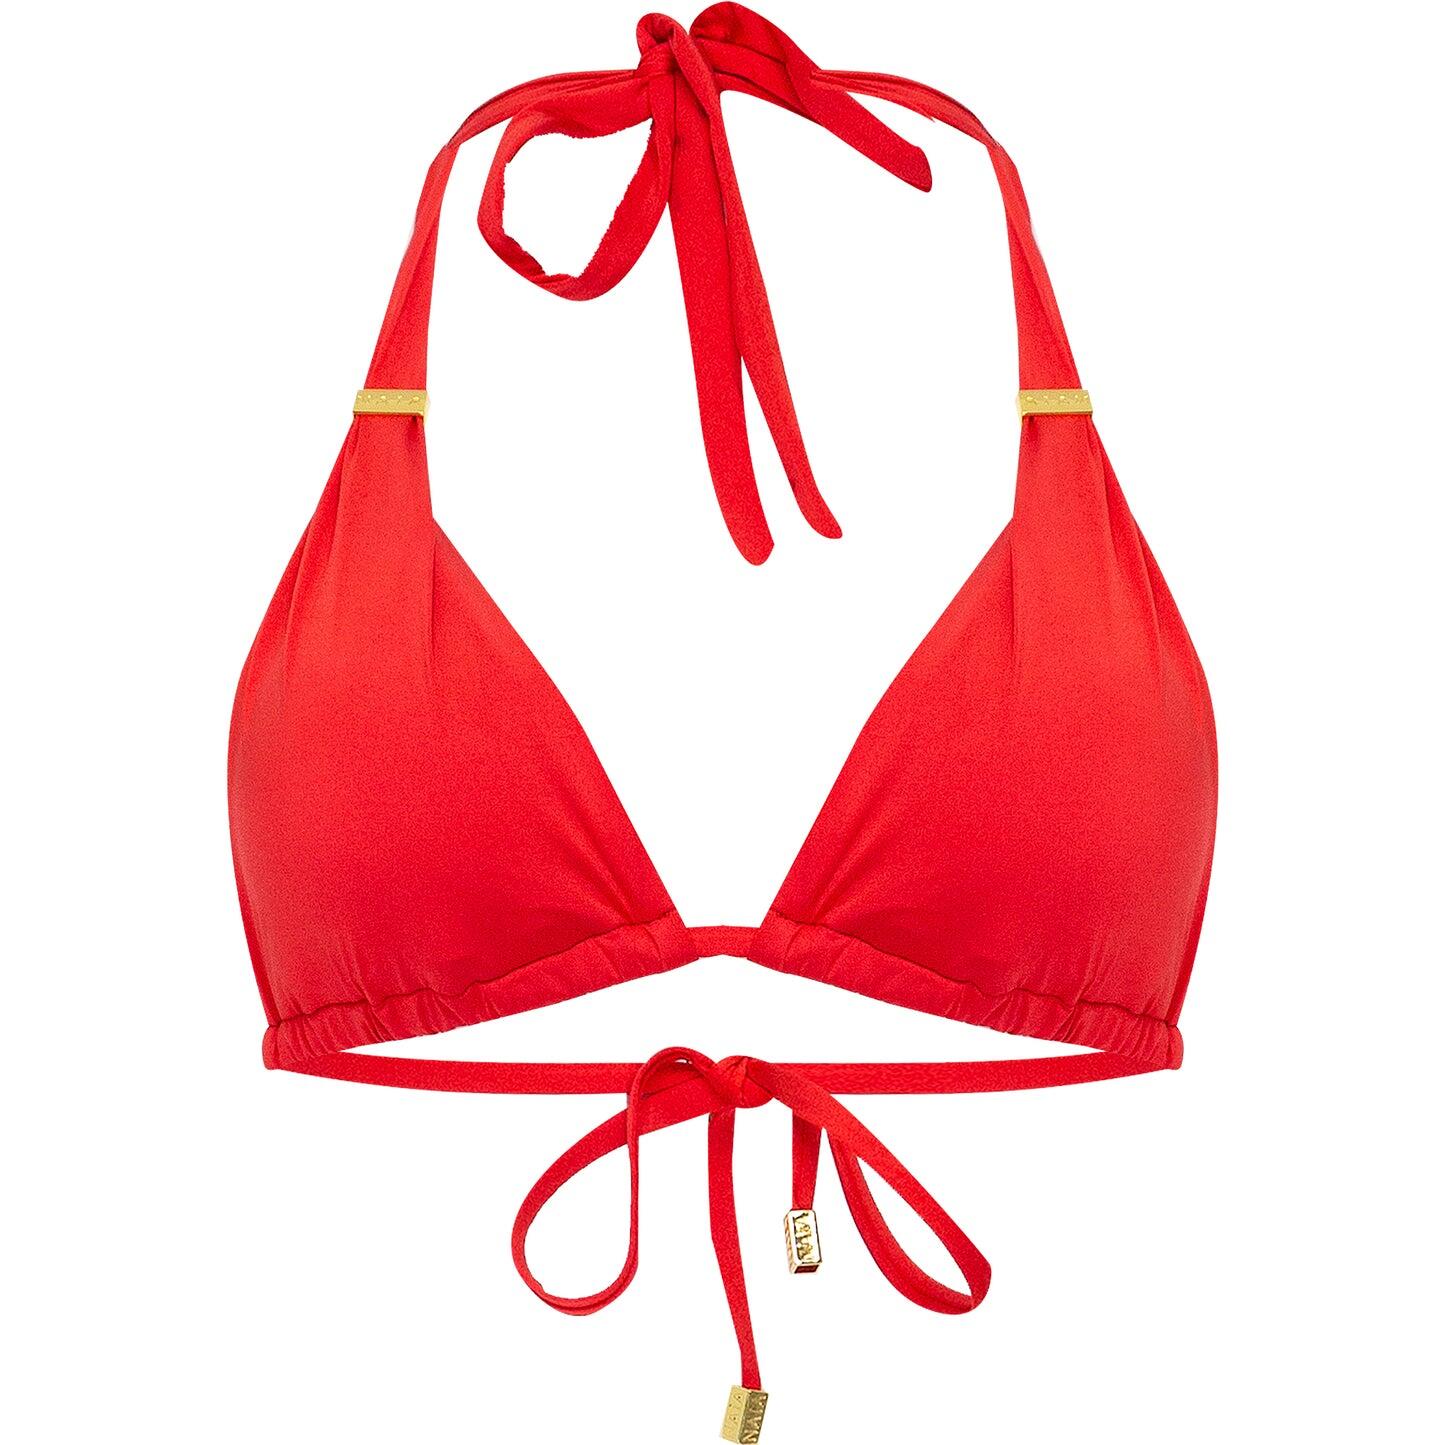 Red Halter Bikini Top with Naia Gold Hardware